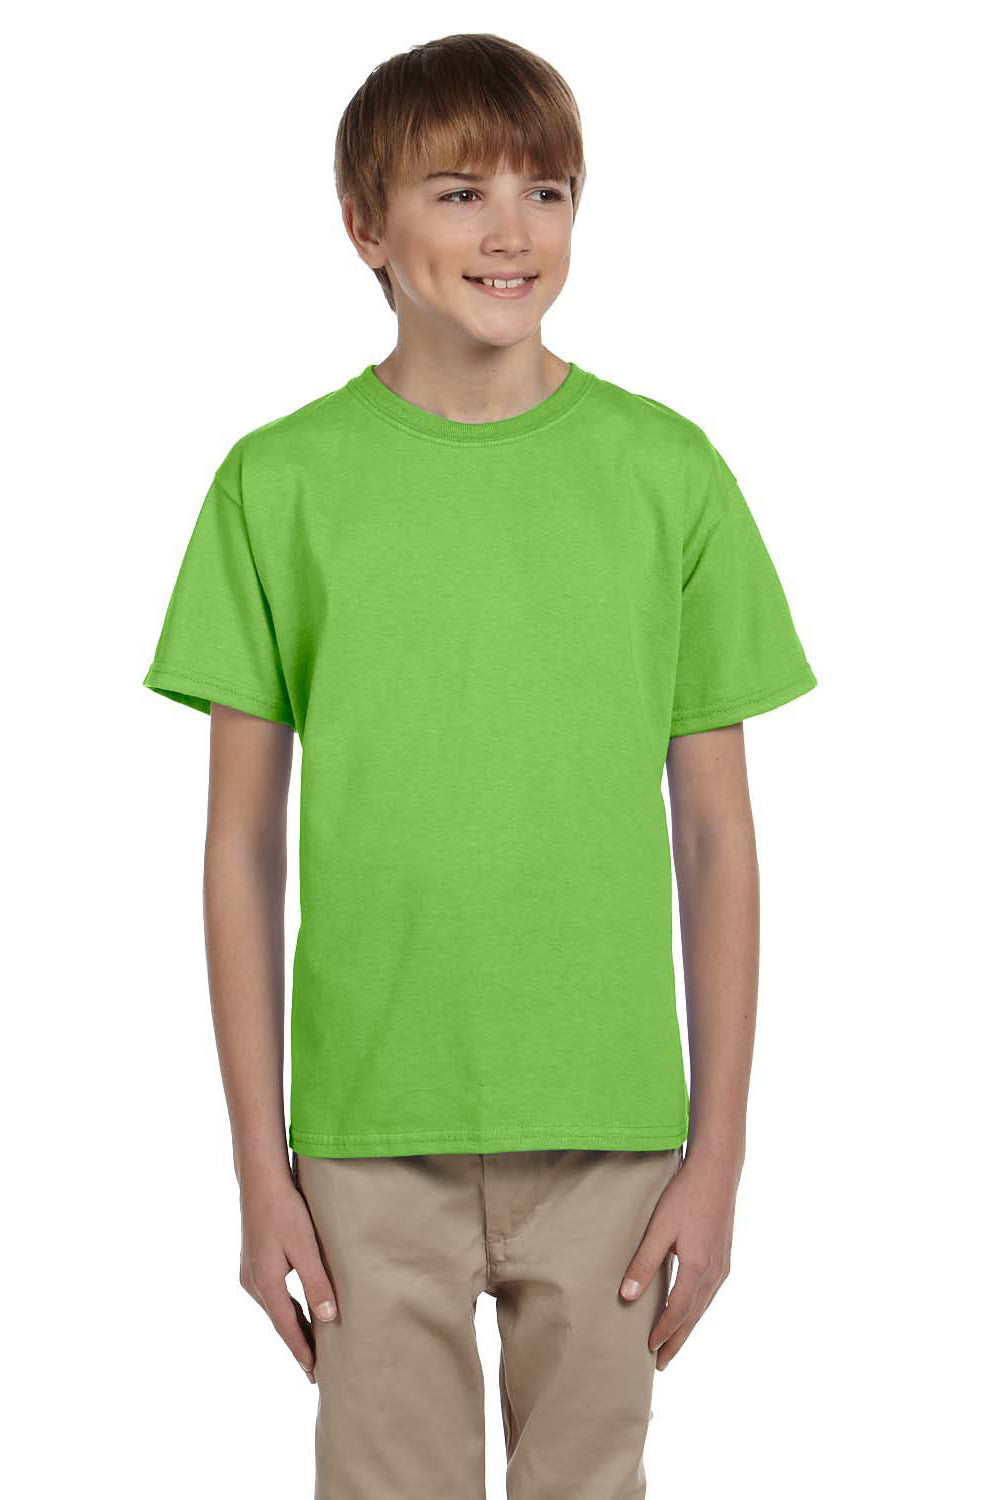 Gildan G200B Youth Ultra Short Sleeve Crewneck T-Shirt Lime Green Front